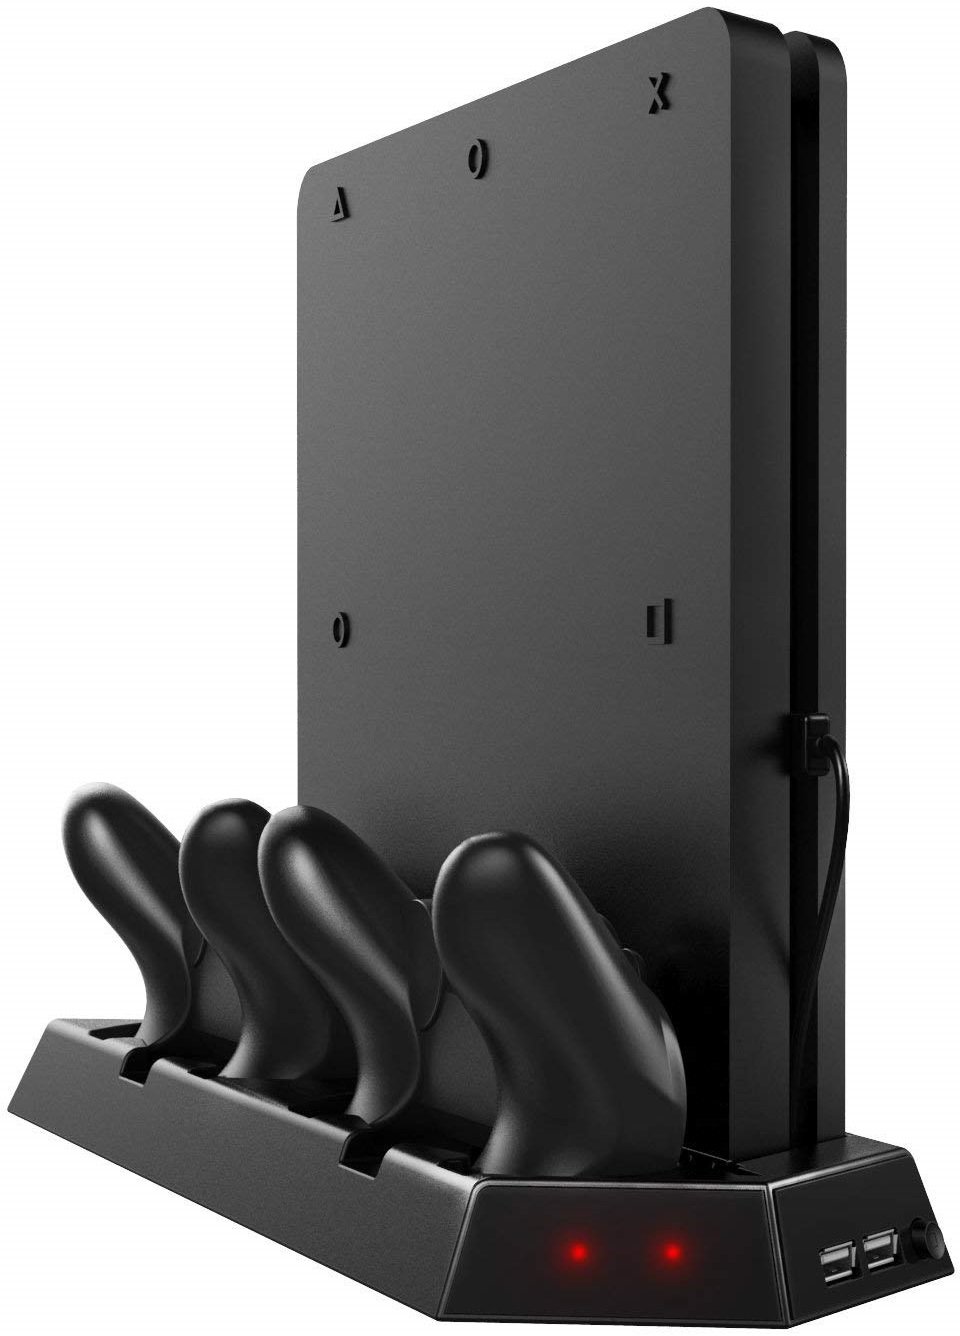 Kootek vertical PS4 stand